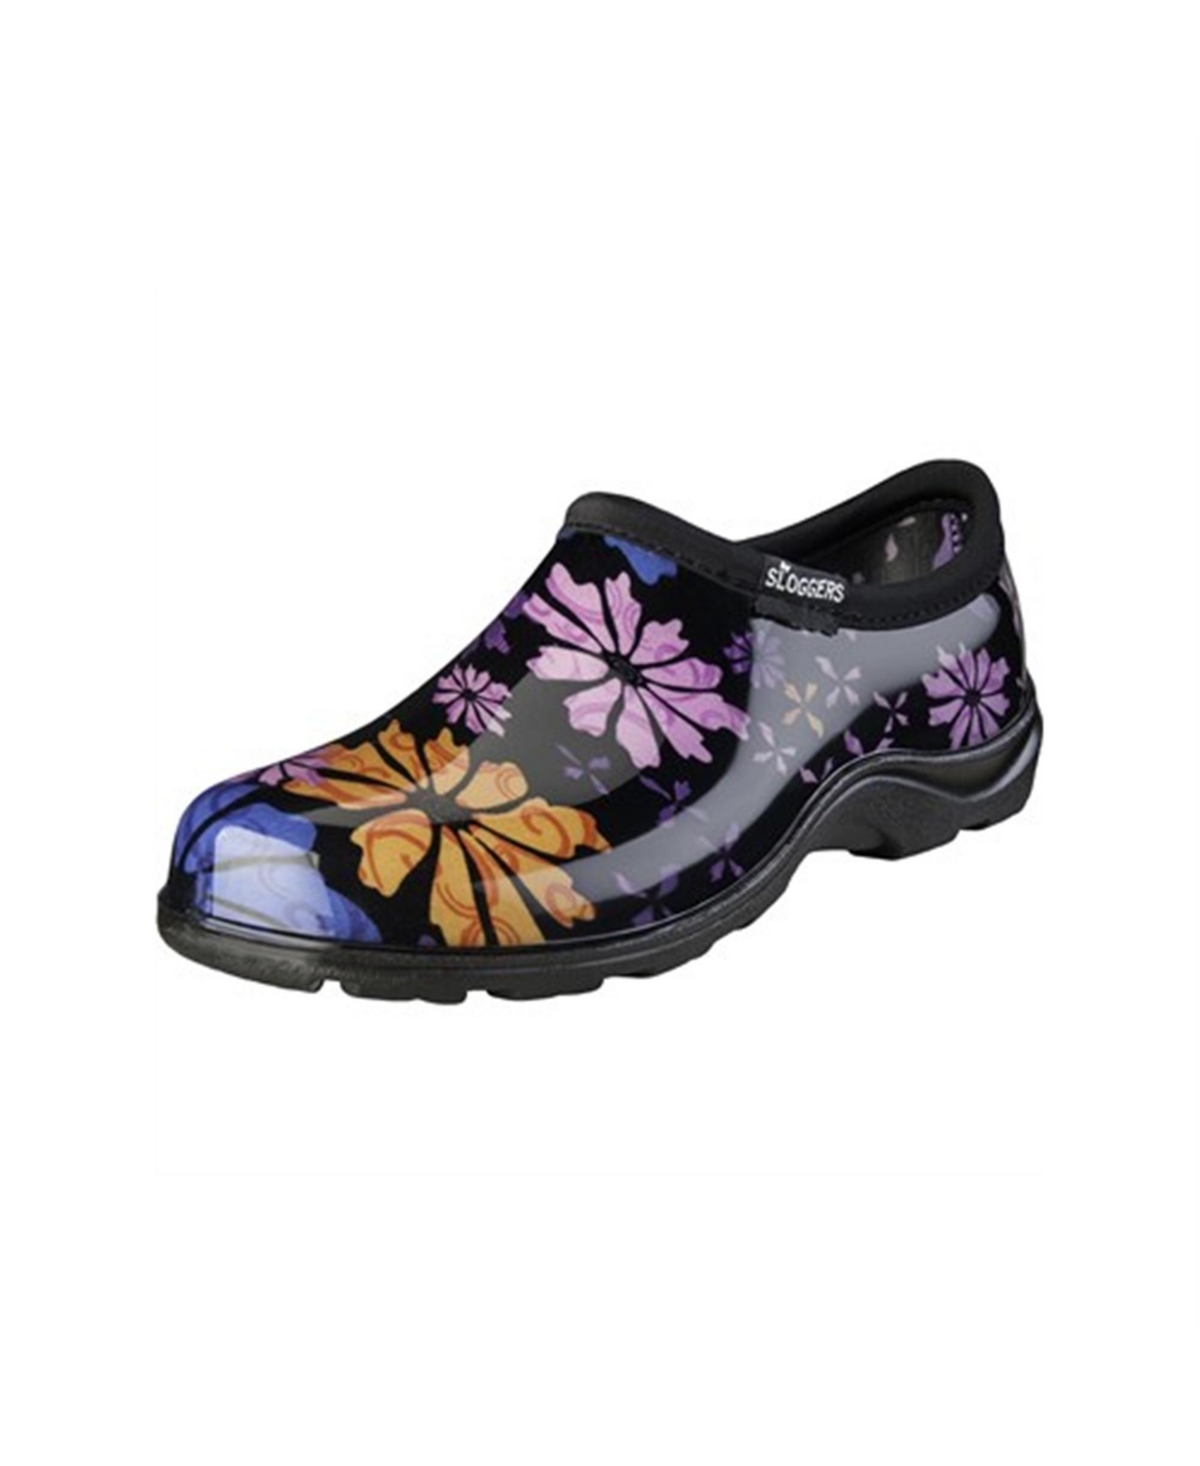 Womens Rain and Garden Shoes, Flower Power Print, Size 6 - Multi